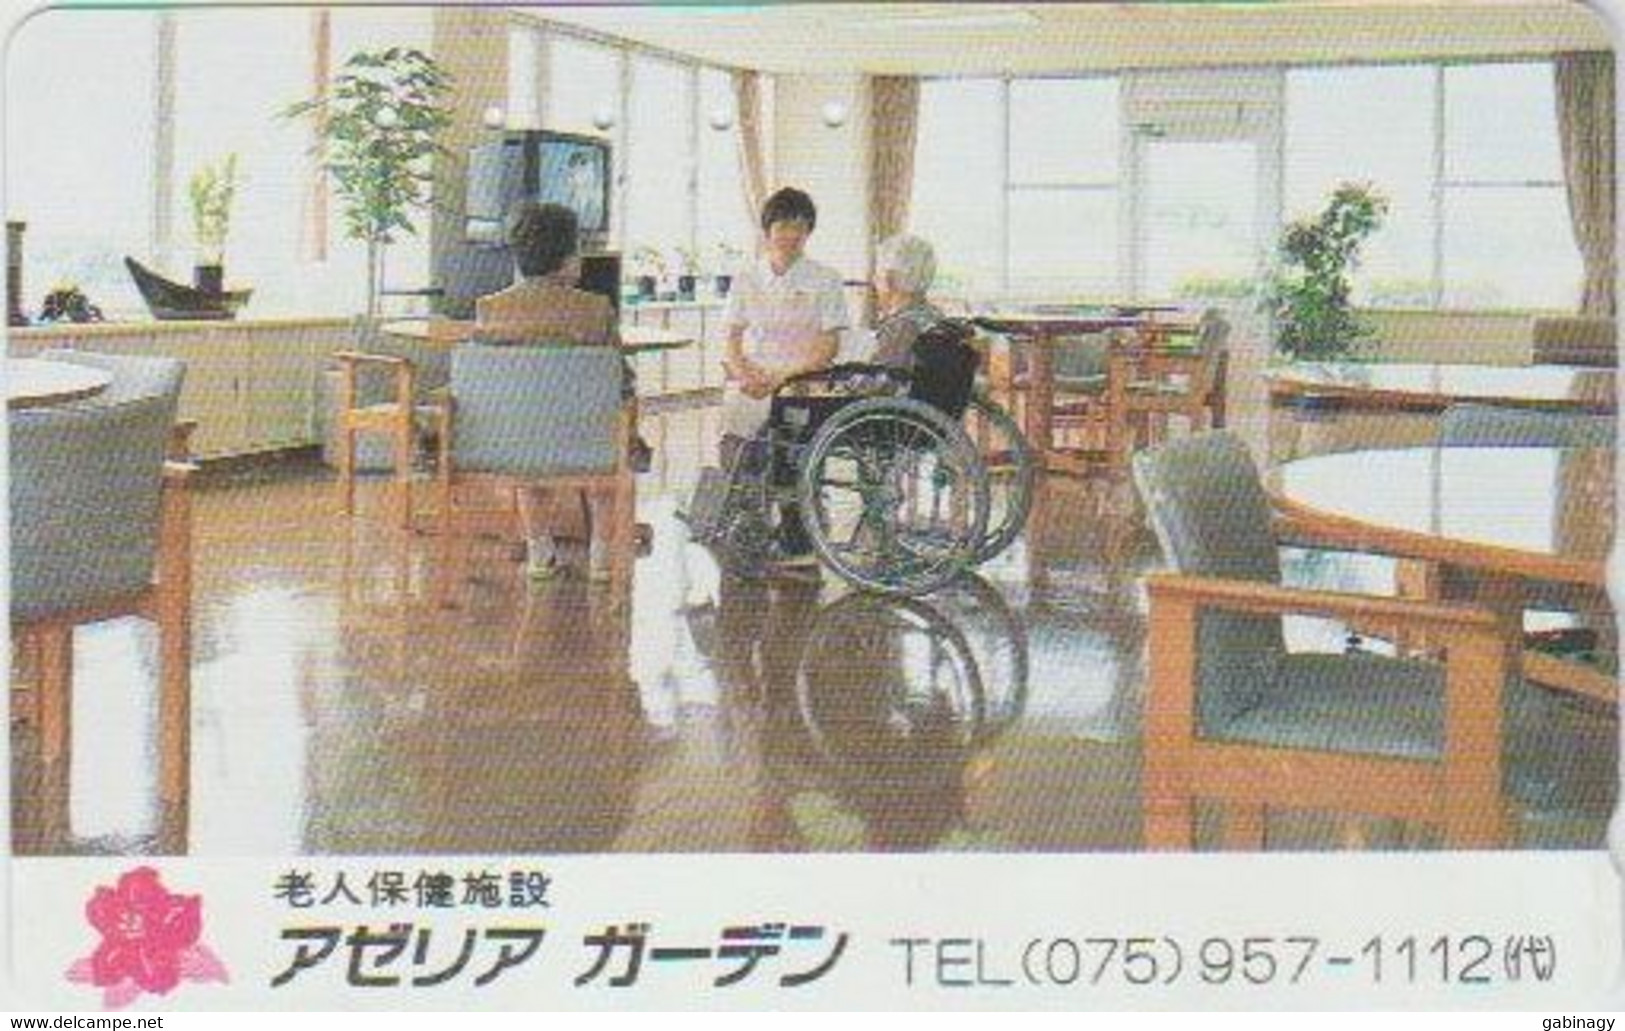 HEALTH - JAPAN-024 - 110-011 - Ontwikkeling